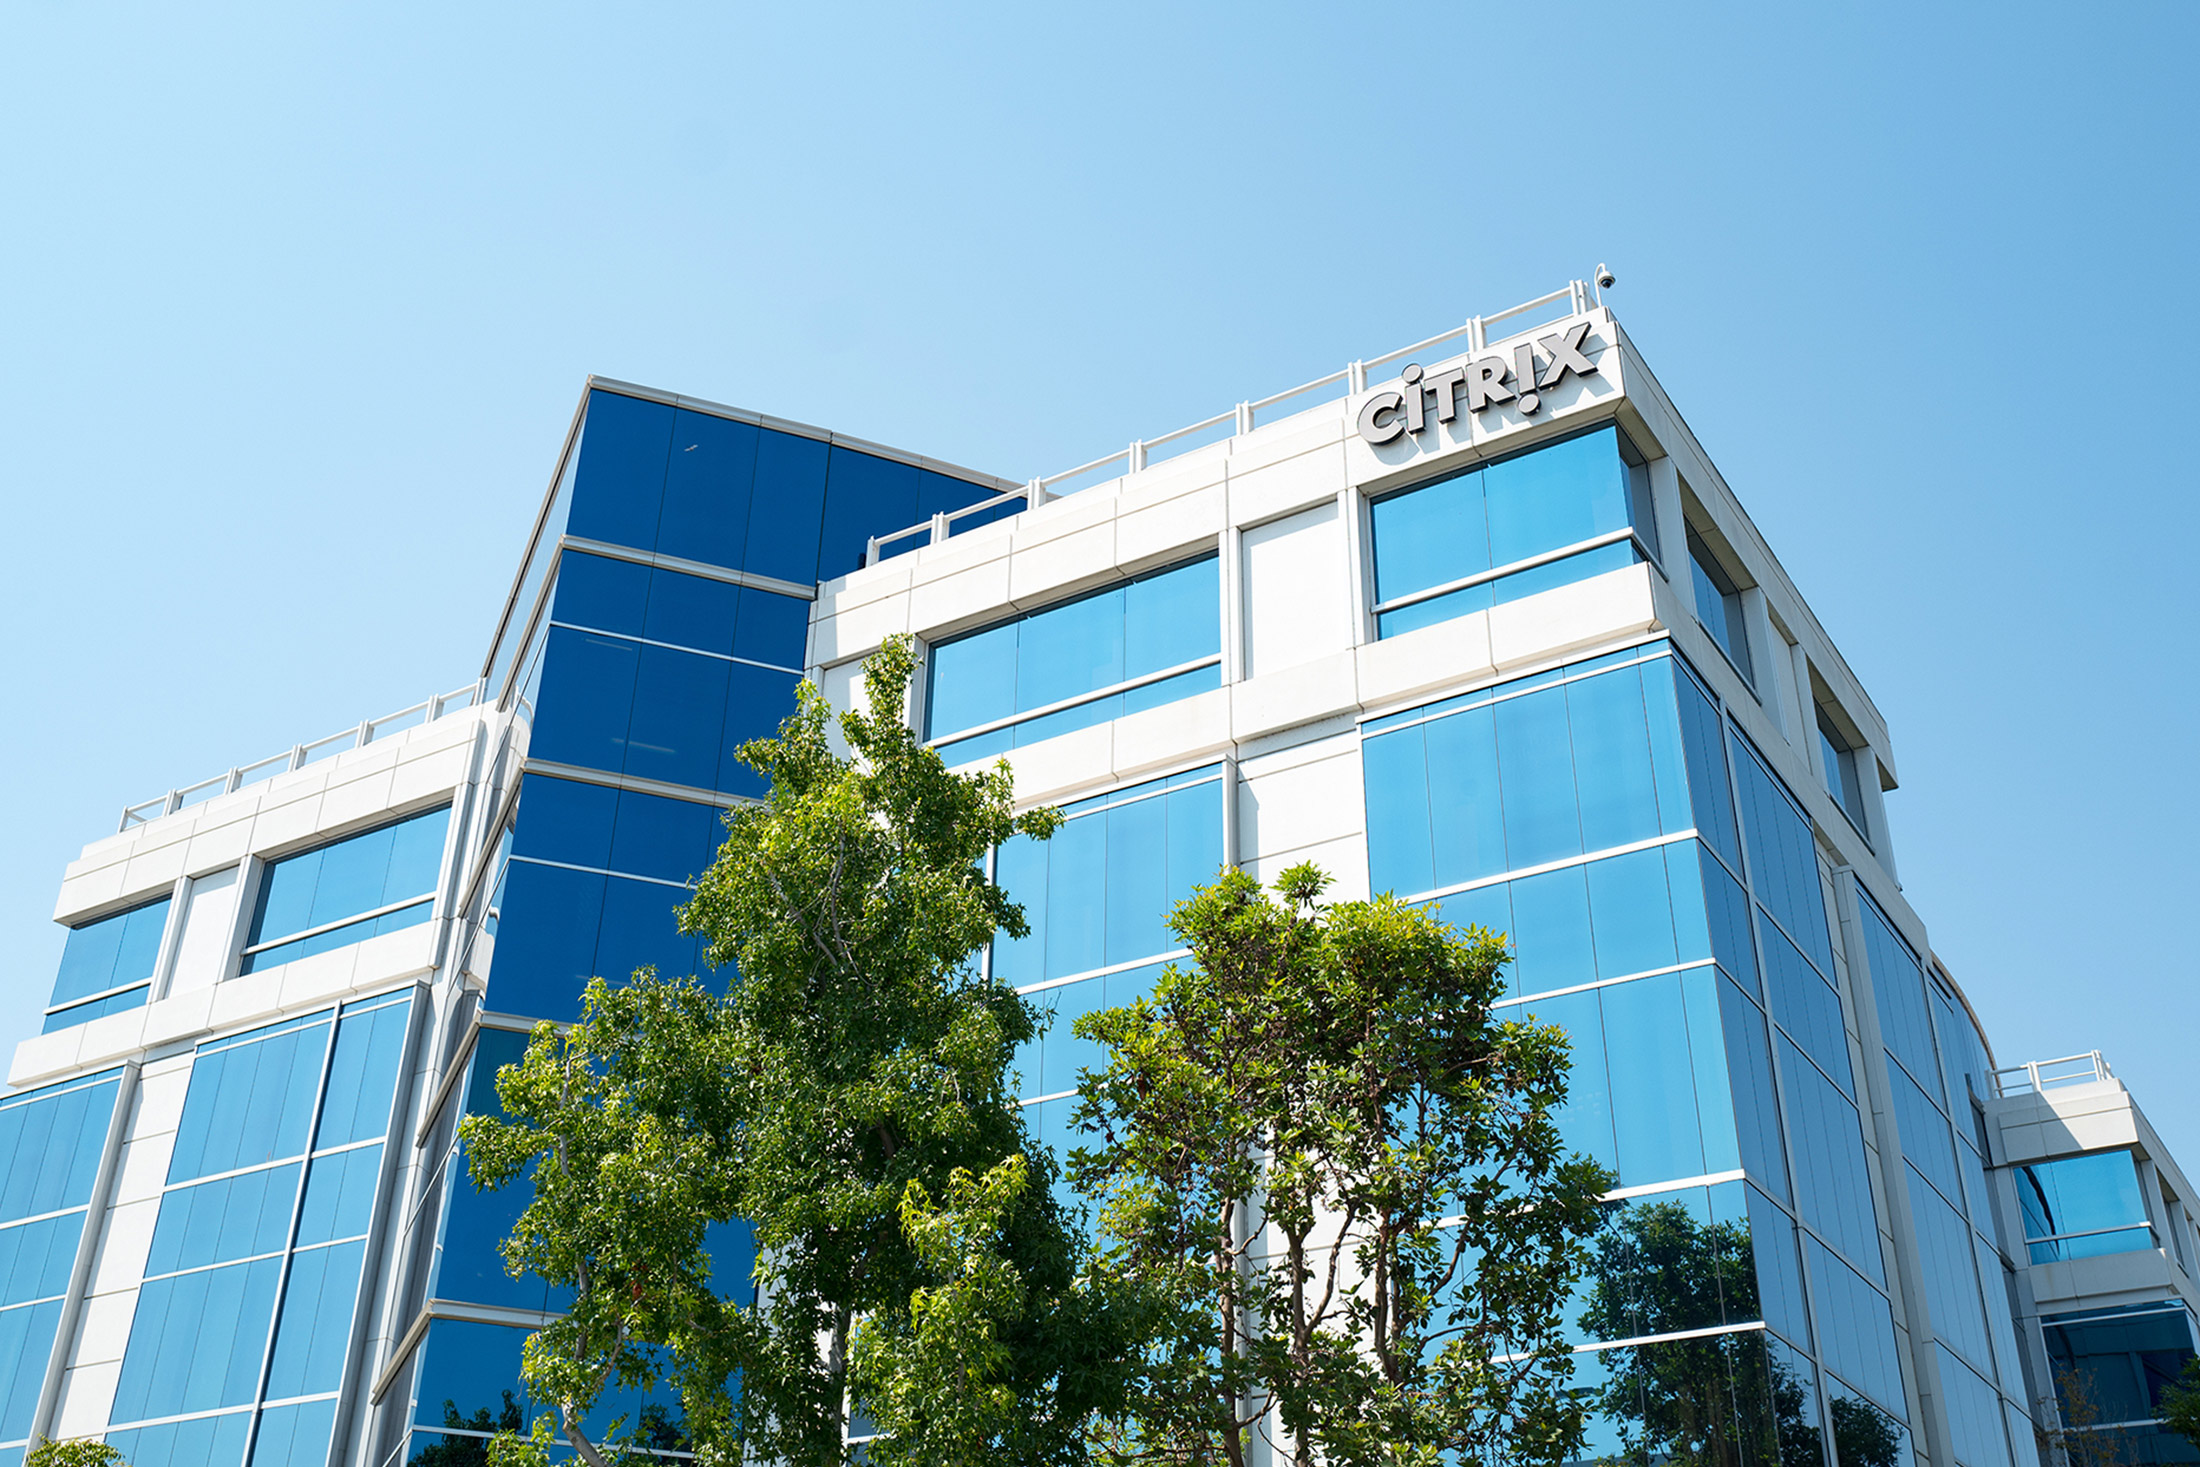 Citrix offices in Santa Clara, California.